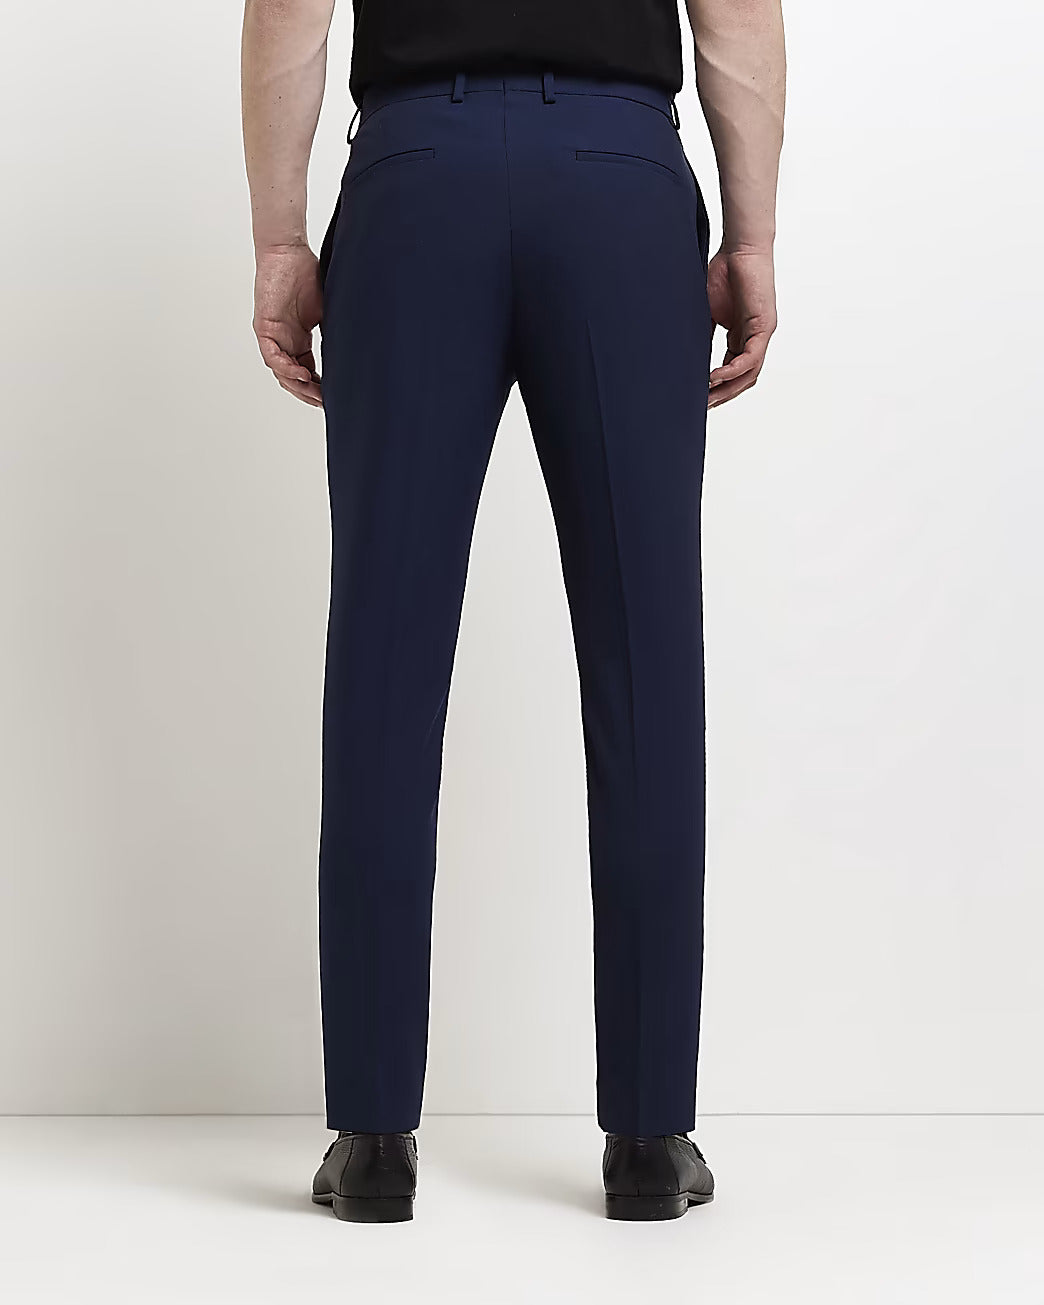 Suit trousers Super skinny fit - Dusky pink - Men | H&M IN